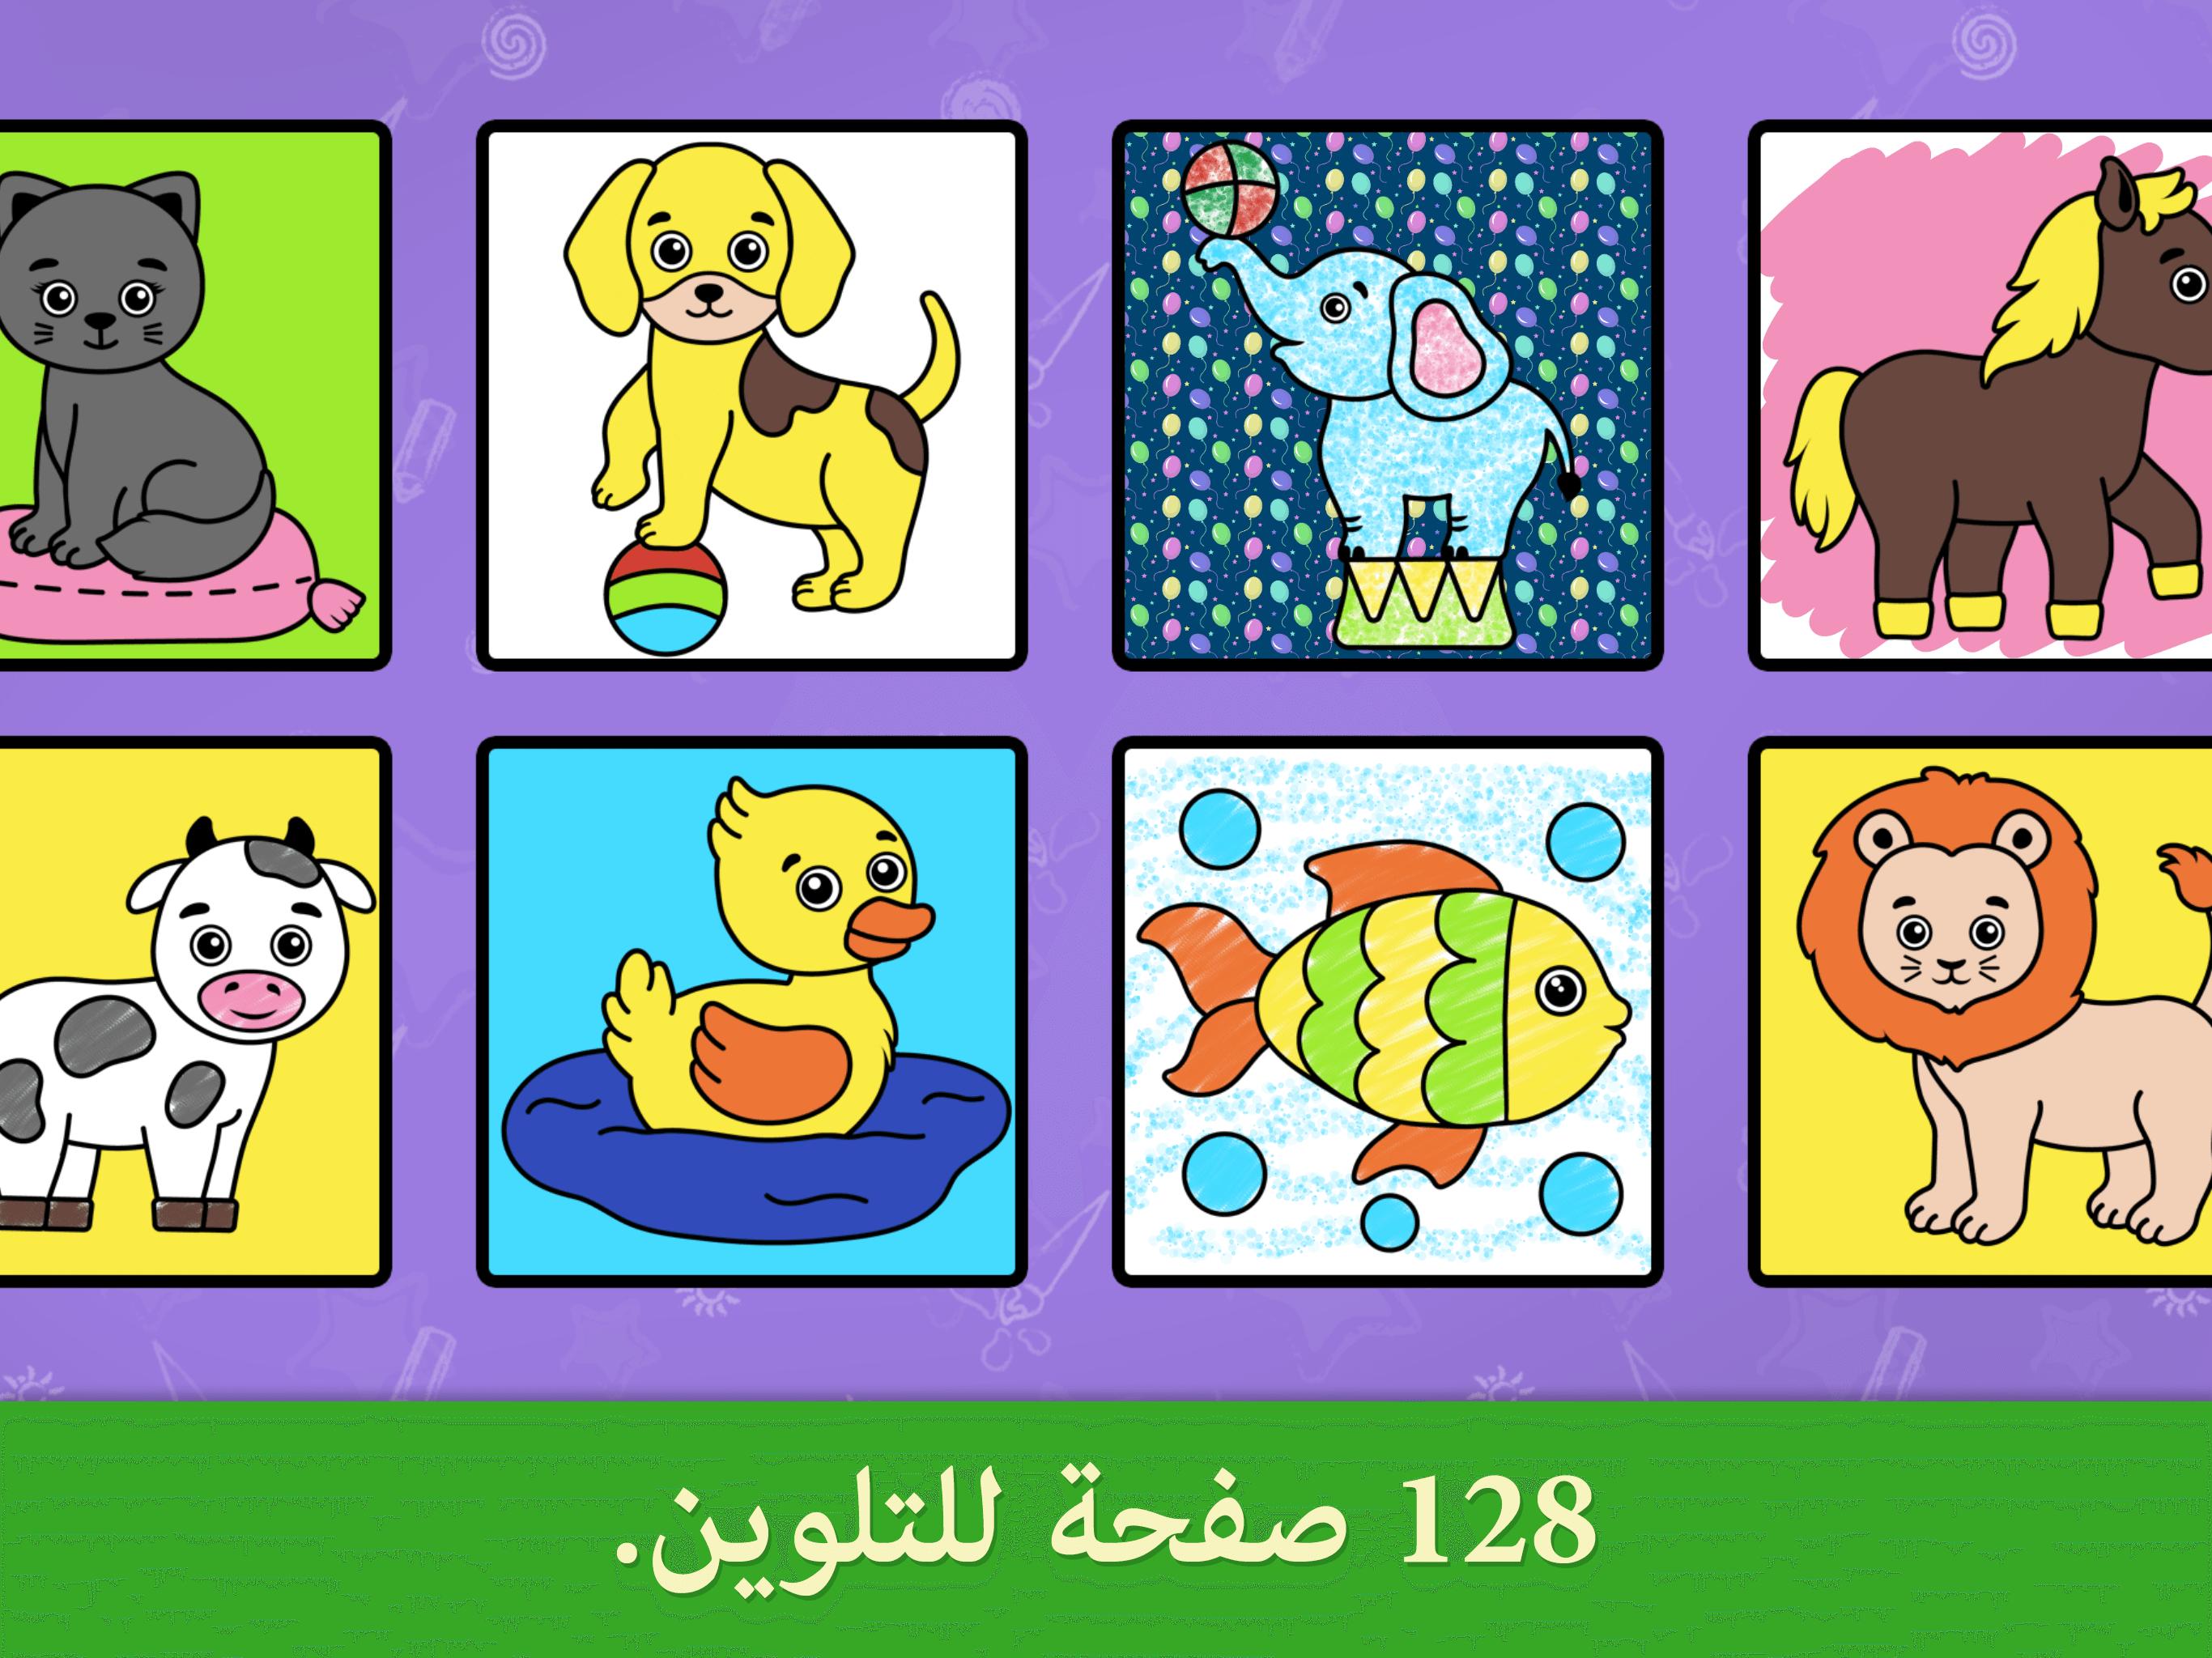 ألعاب تلوين للأطفال for Android - APK Download